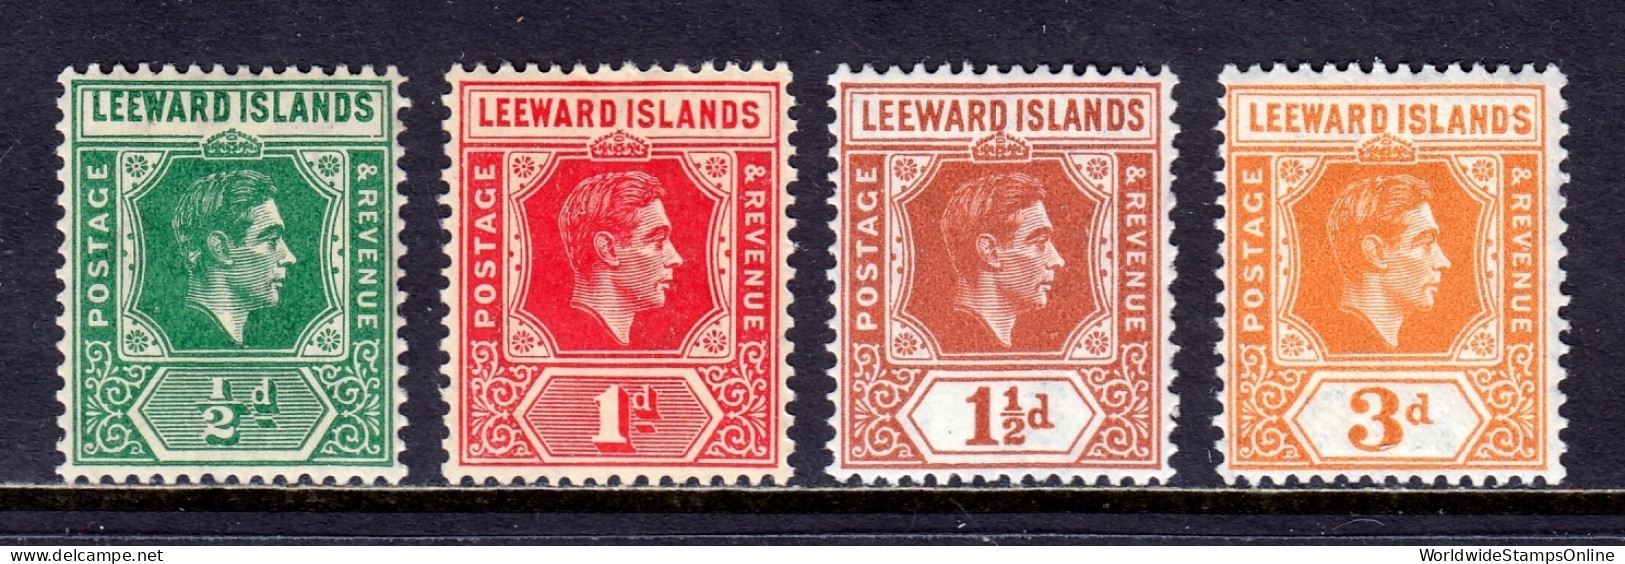 Leeward Islands - Scott #104//109 - MNH - Gum Toning #104, 105 - SCV $16 - Leeward  Islands